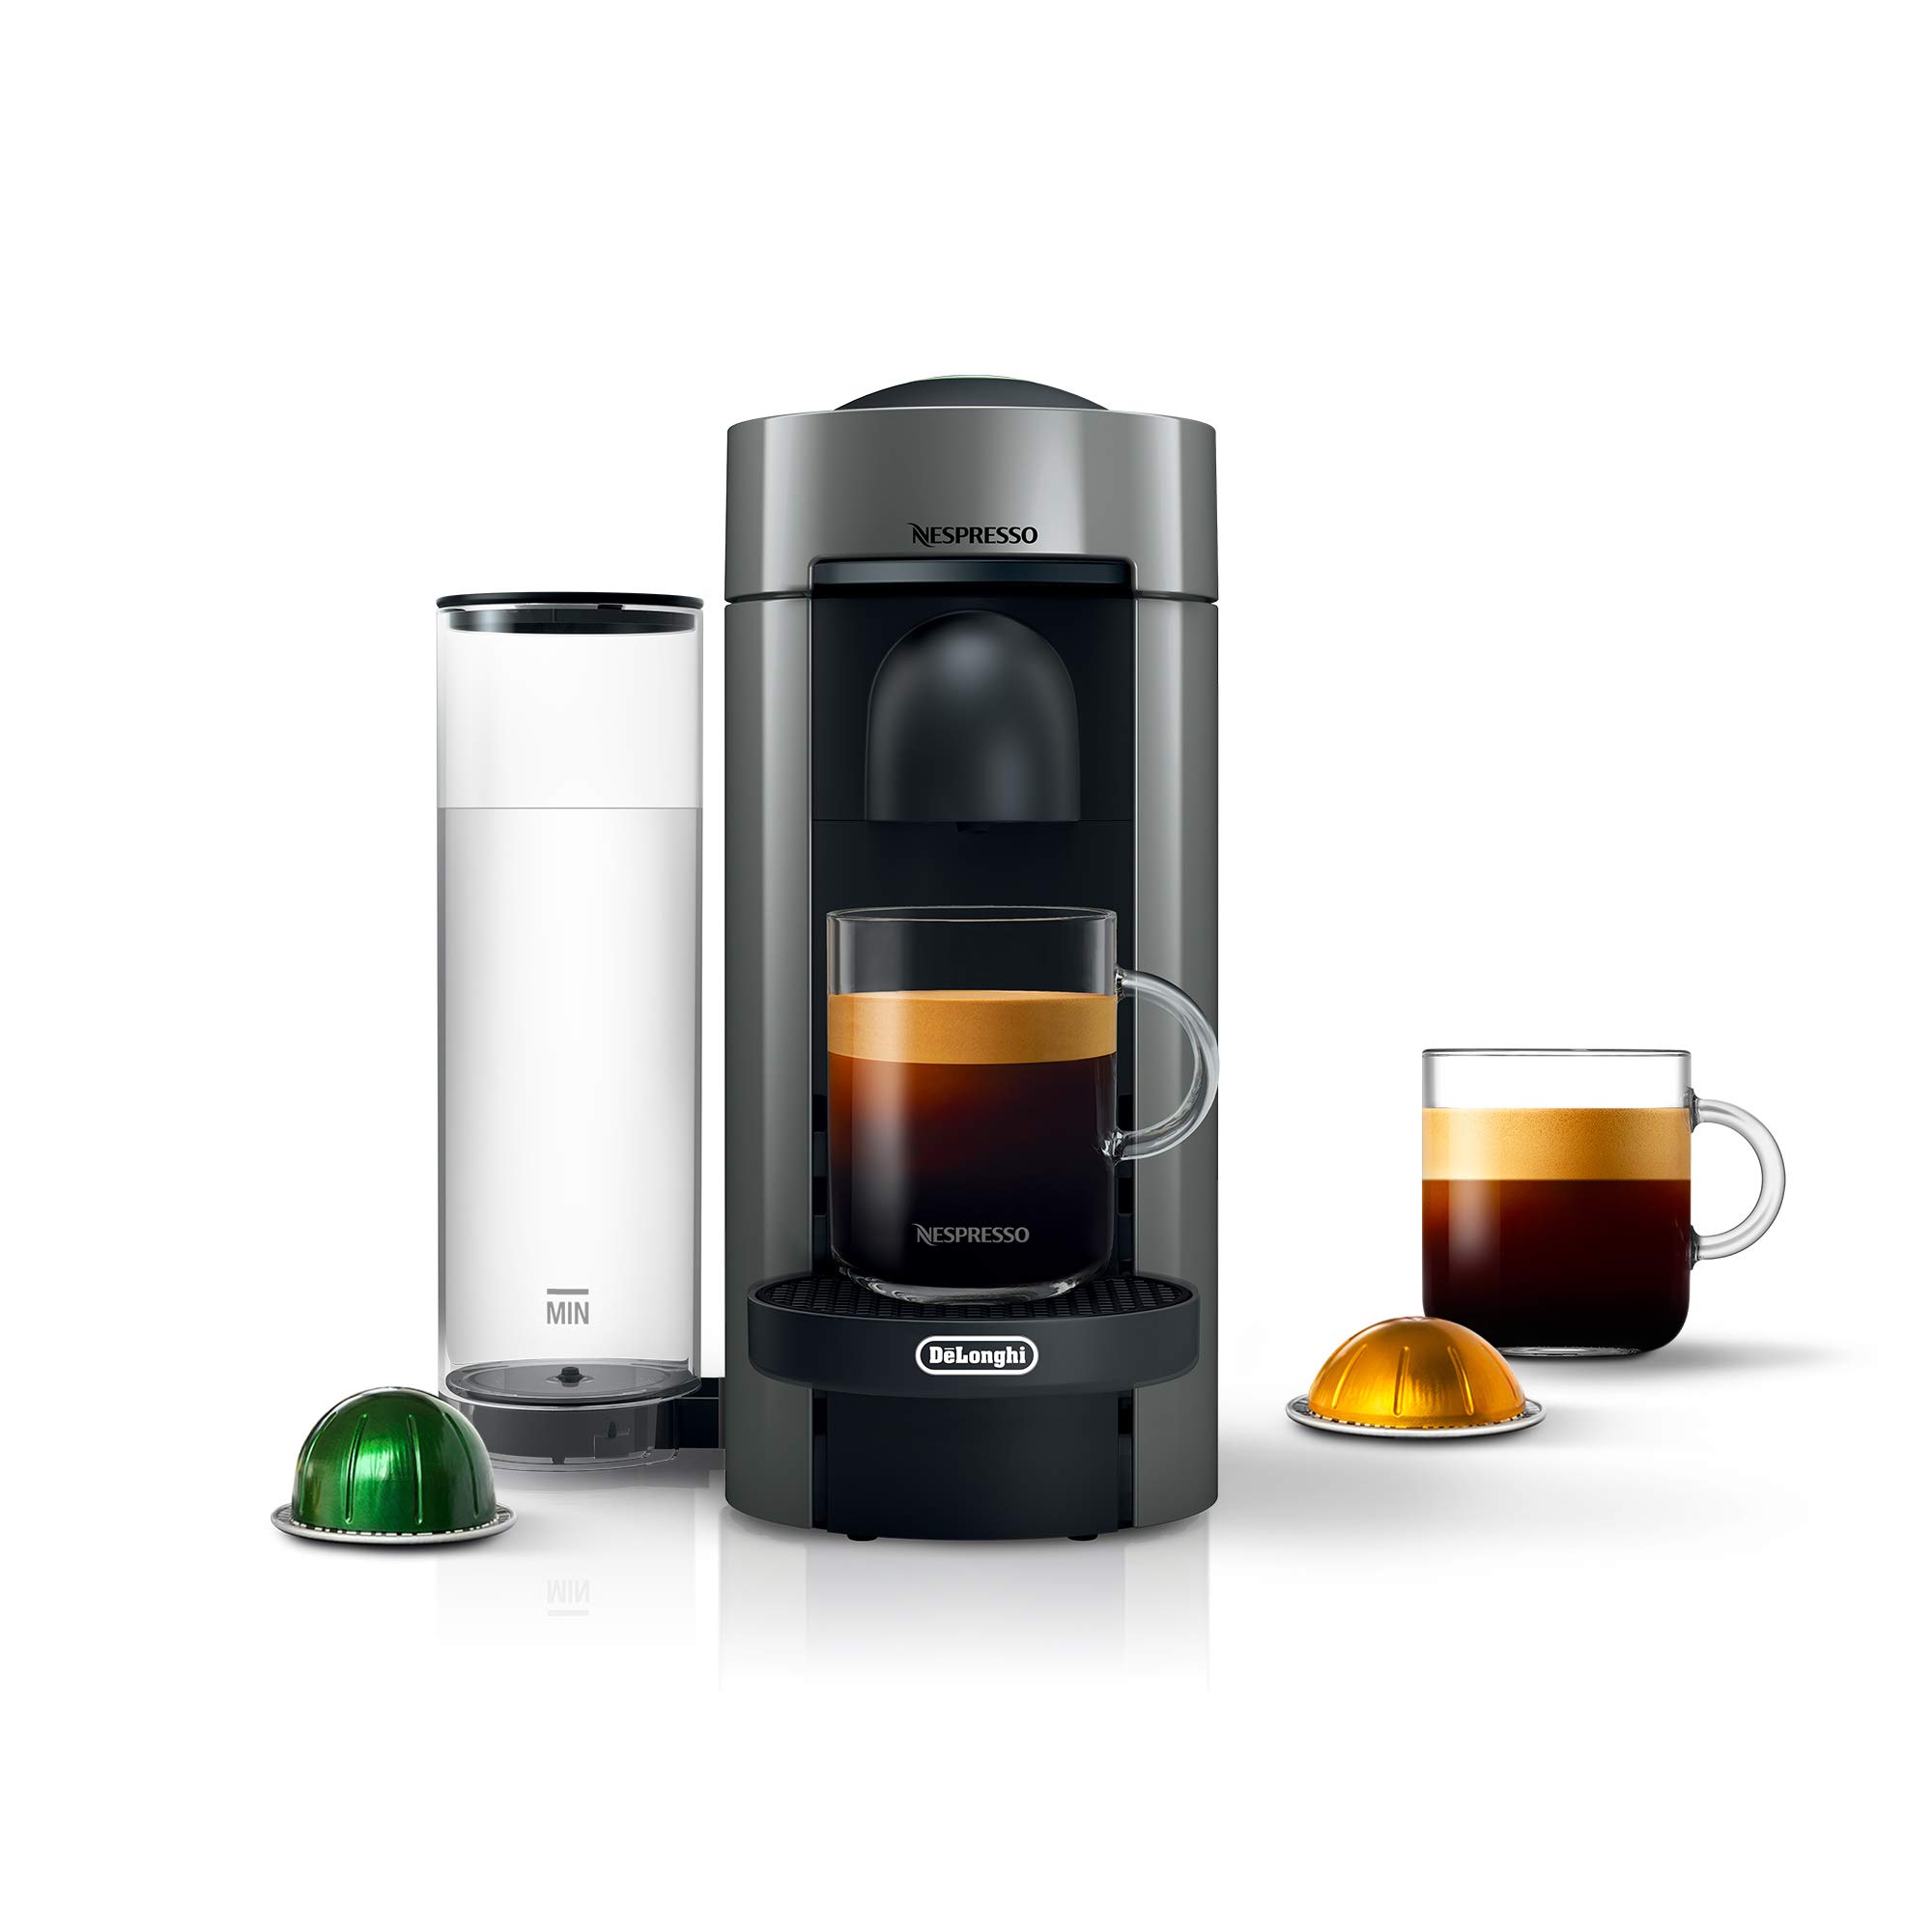 How to Use the Nespresso Vertuo Plus Coffee & Espresso Maker by De Longhi